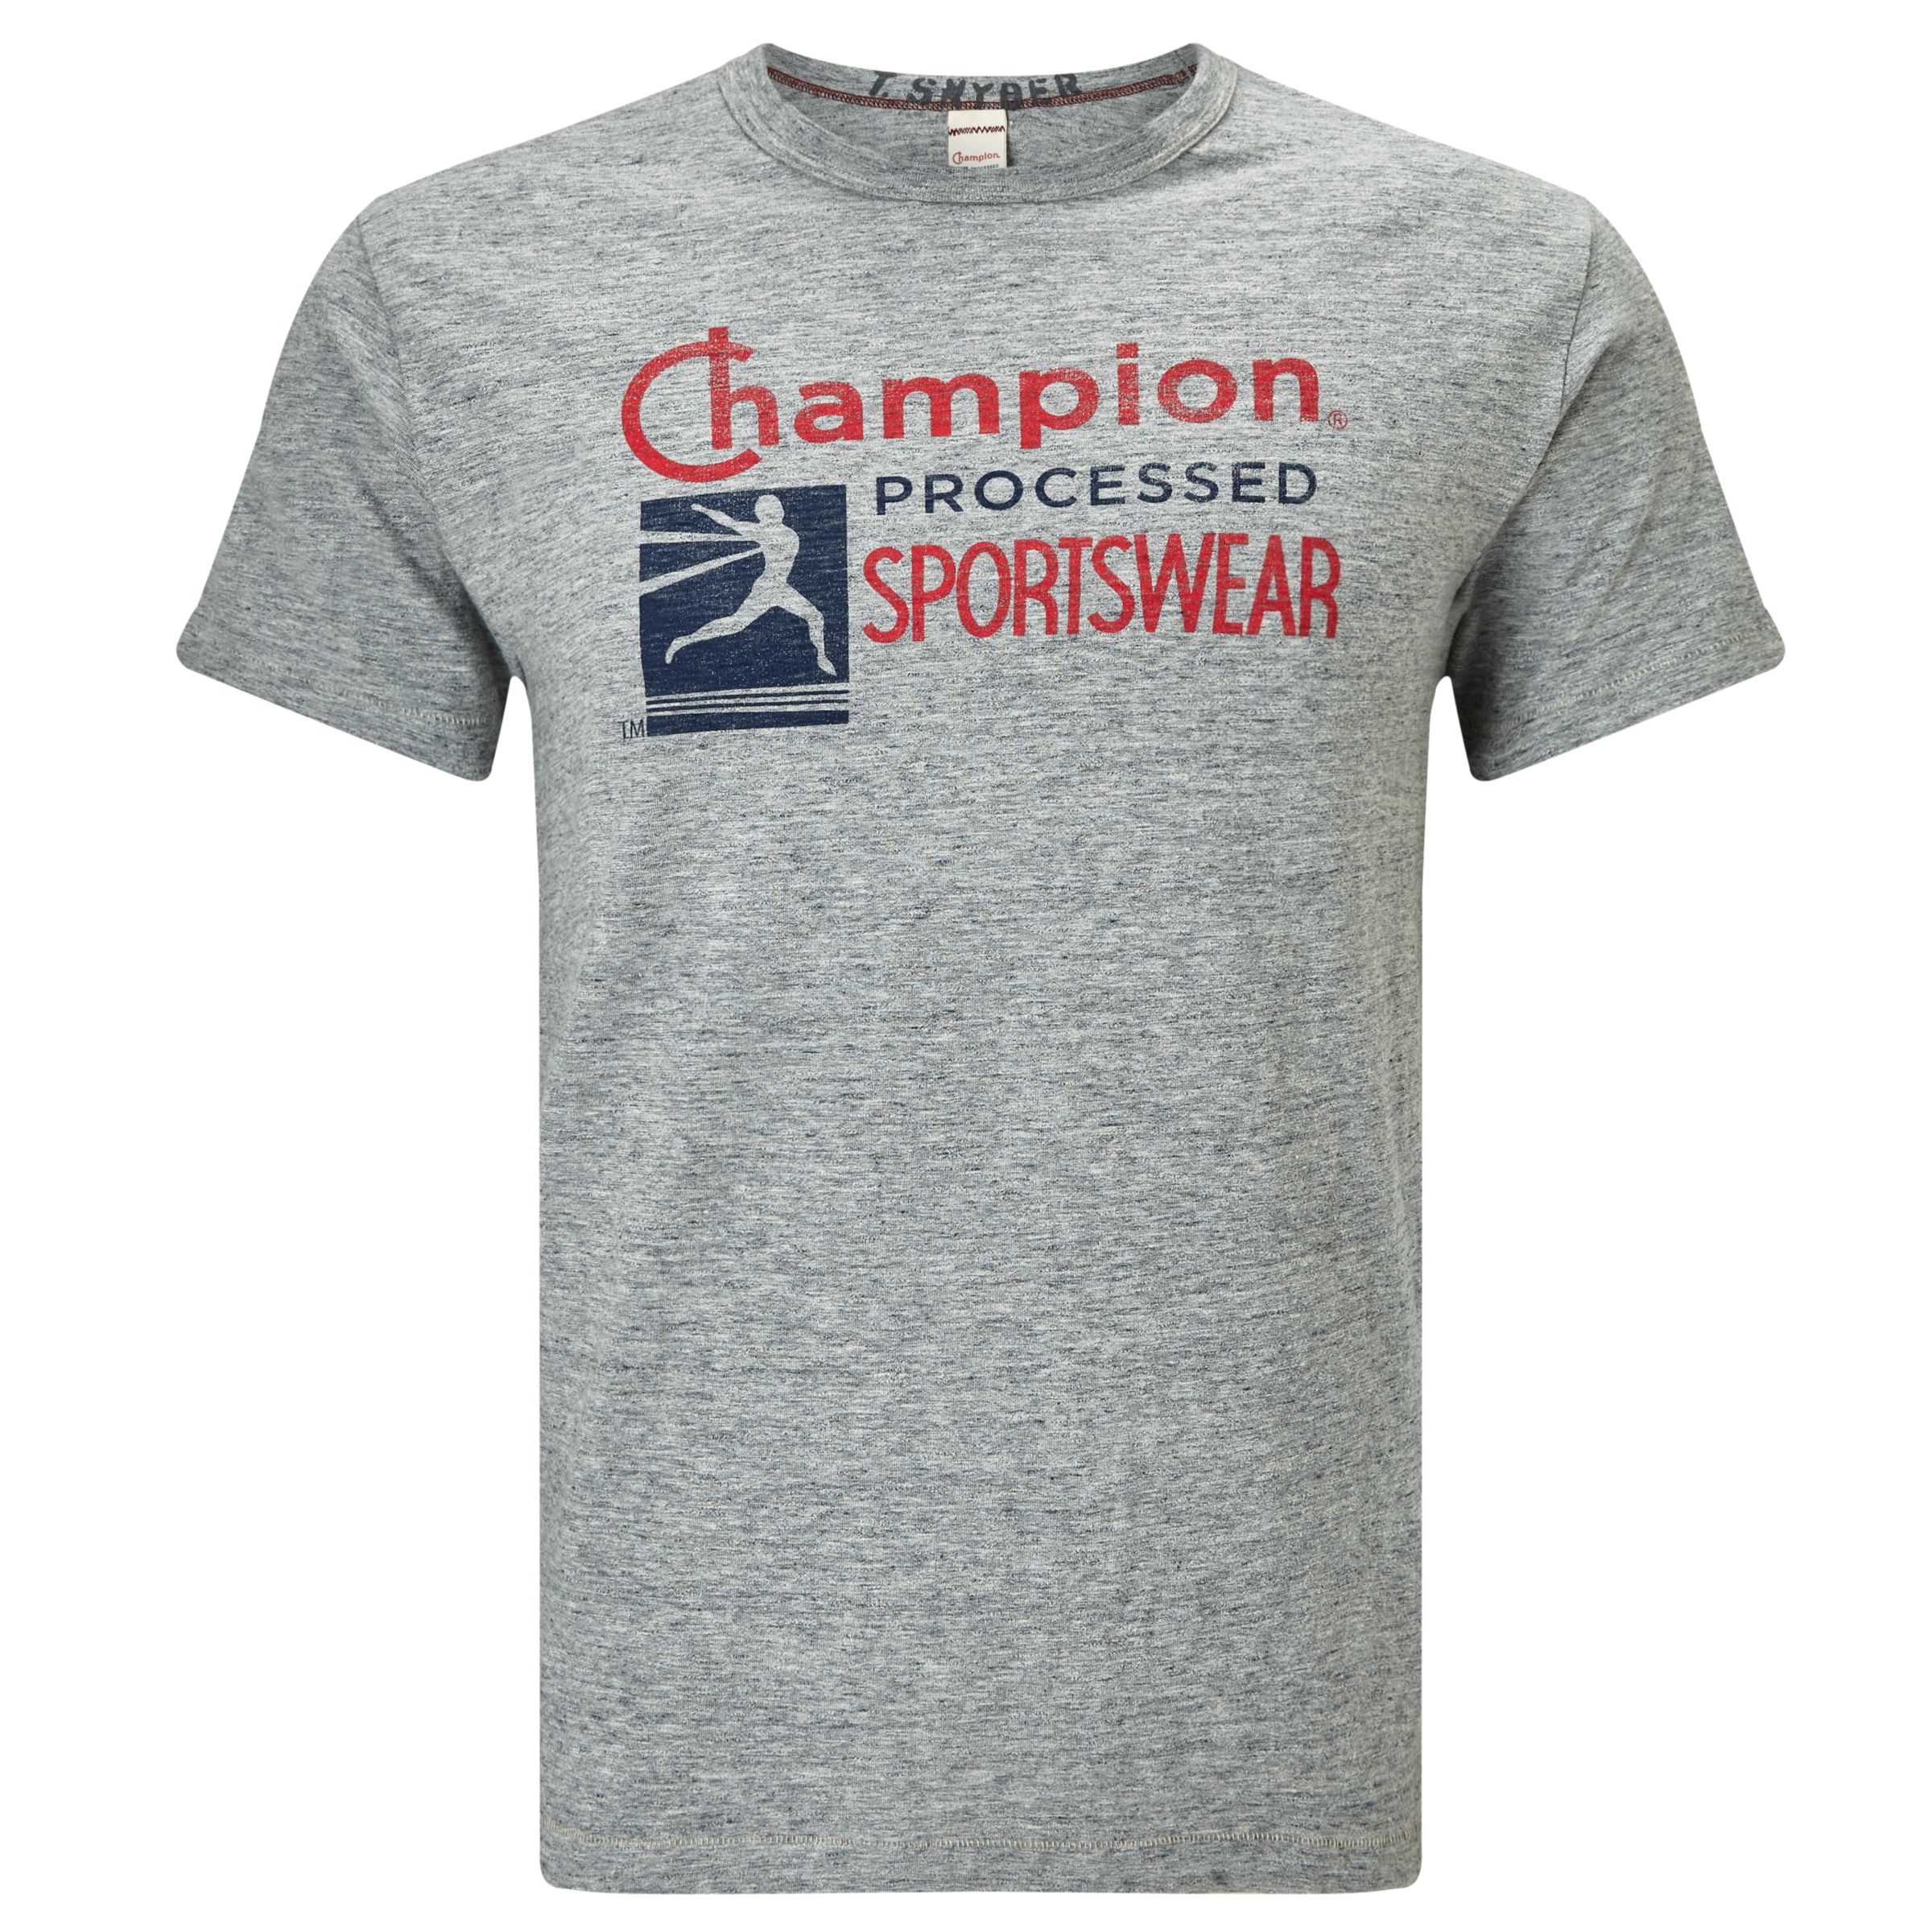 champion processed sportswear